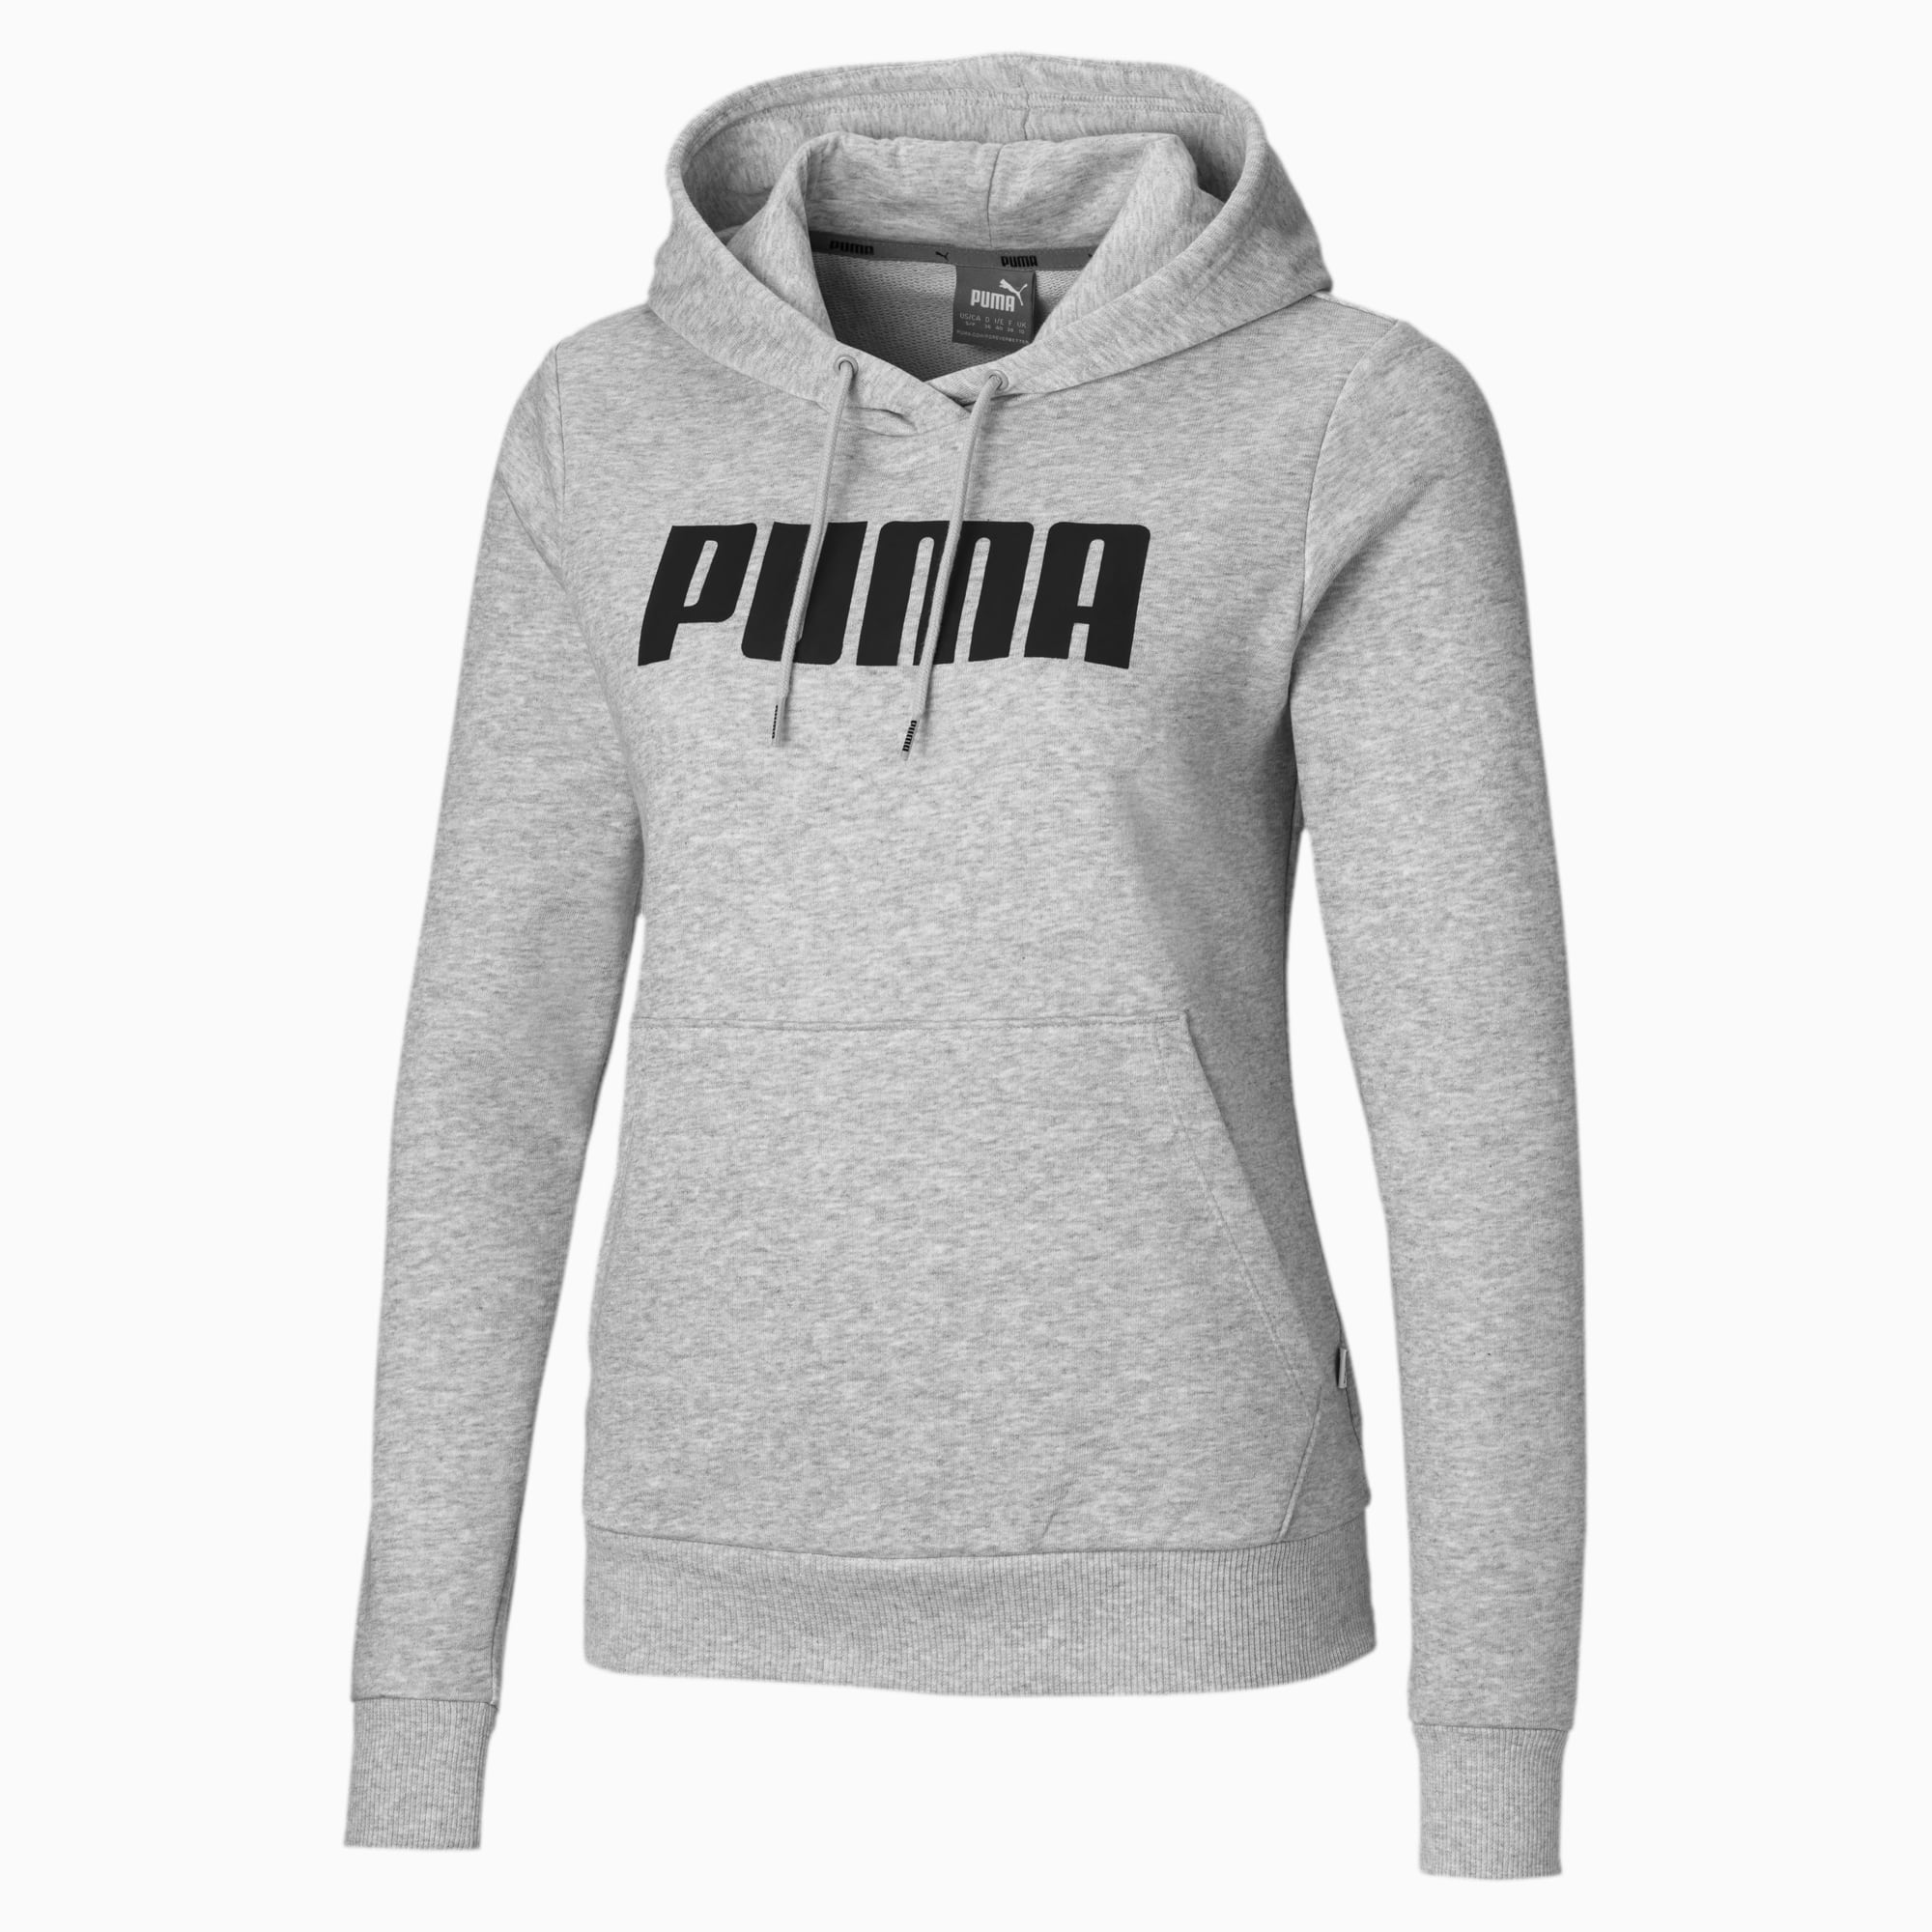 puma sweater womens